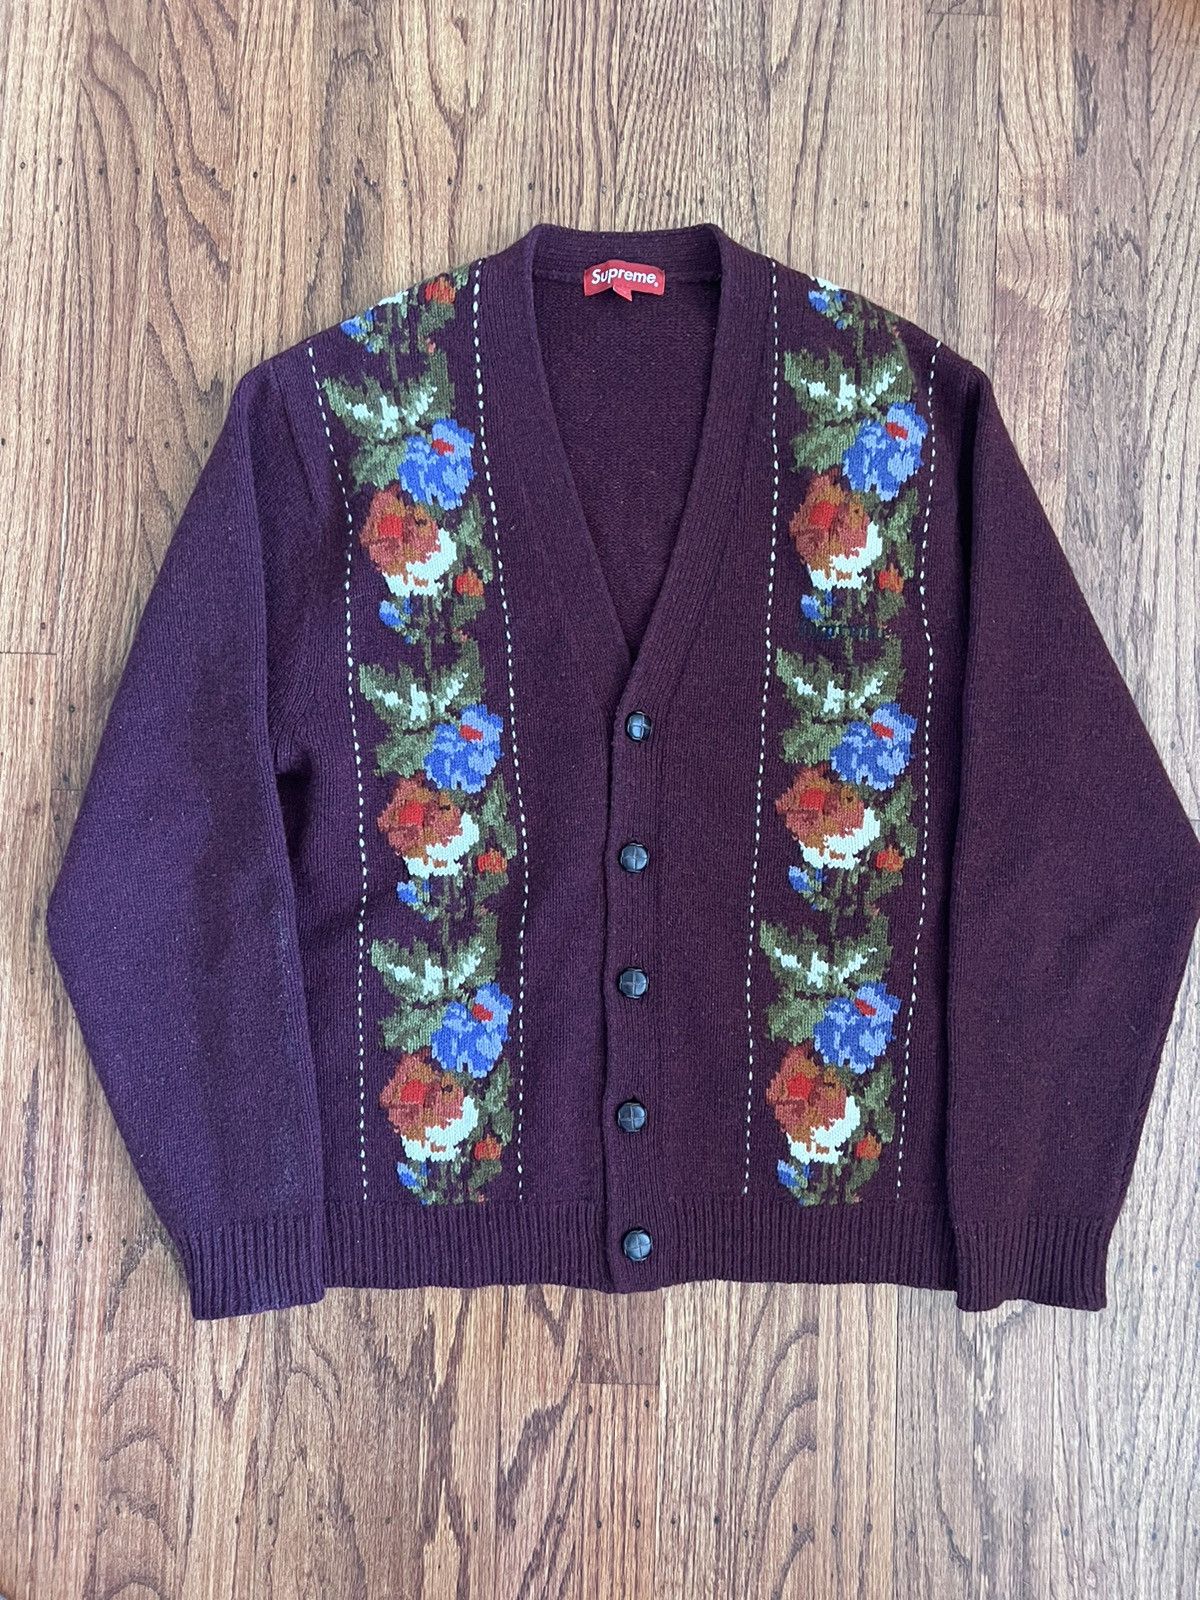 Supreme Supreme Floral Stripe Wool Cardigan | Grailed